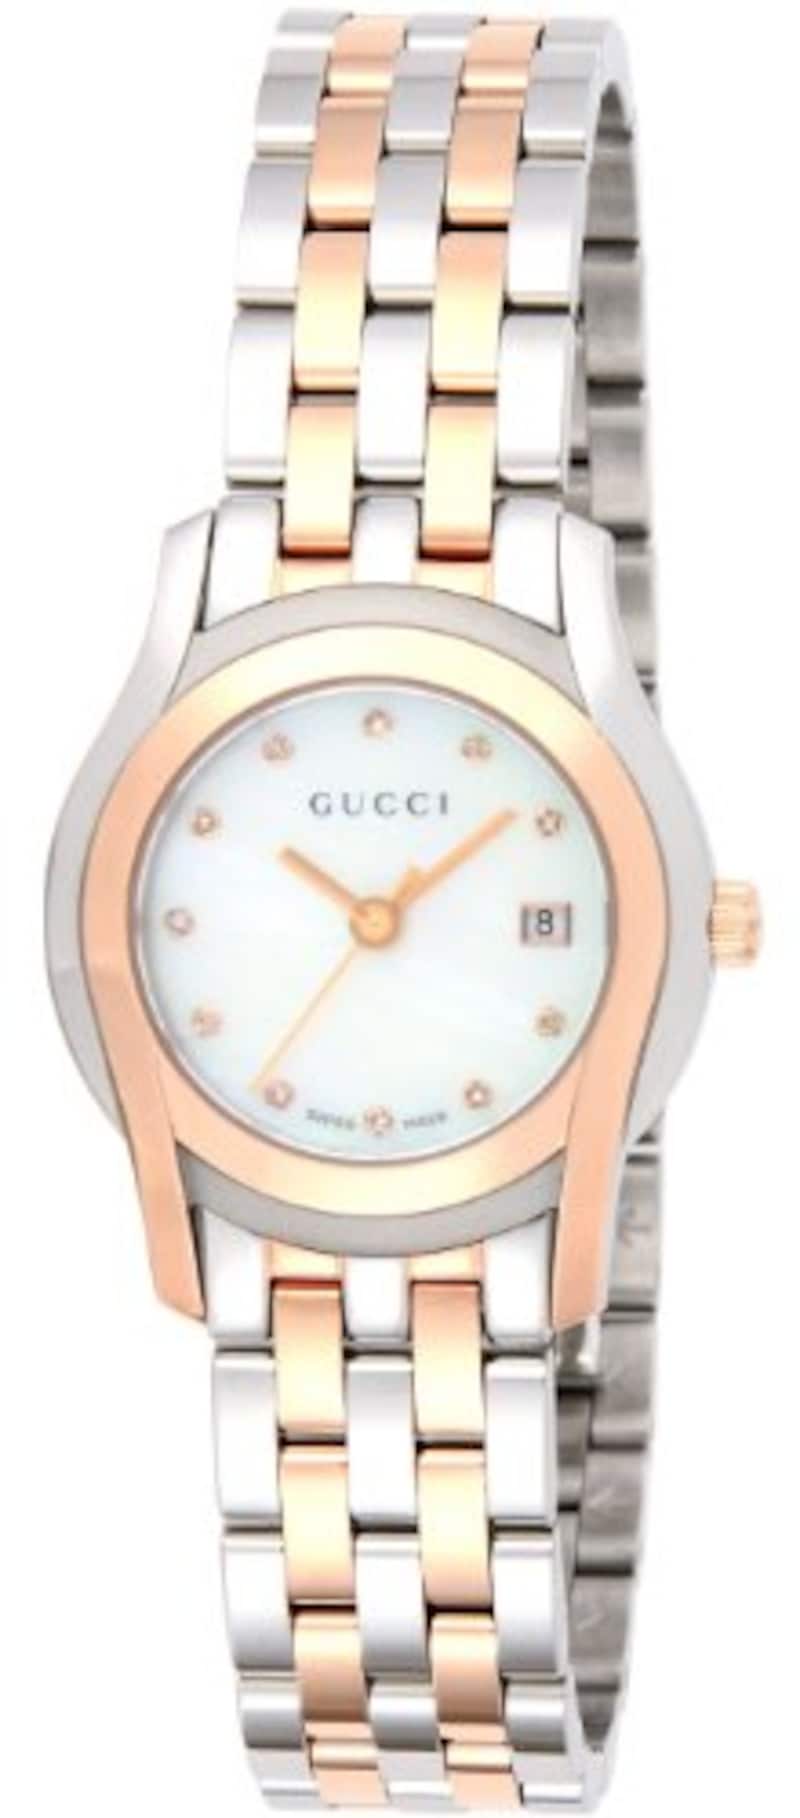 GUCCI（グッチ）,腕時計 Gクラス ホワイトパール文字盤,YA055535